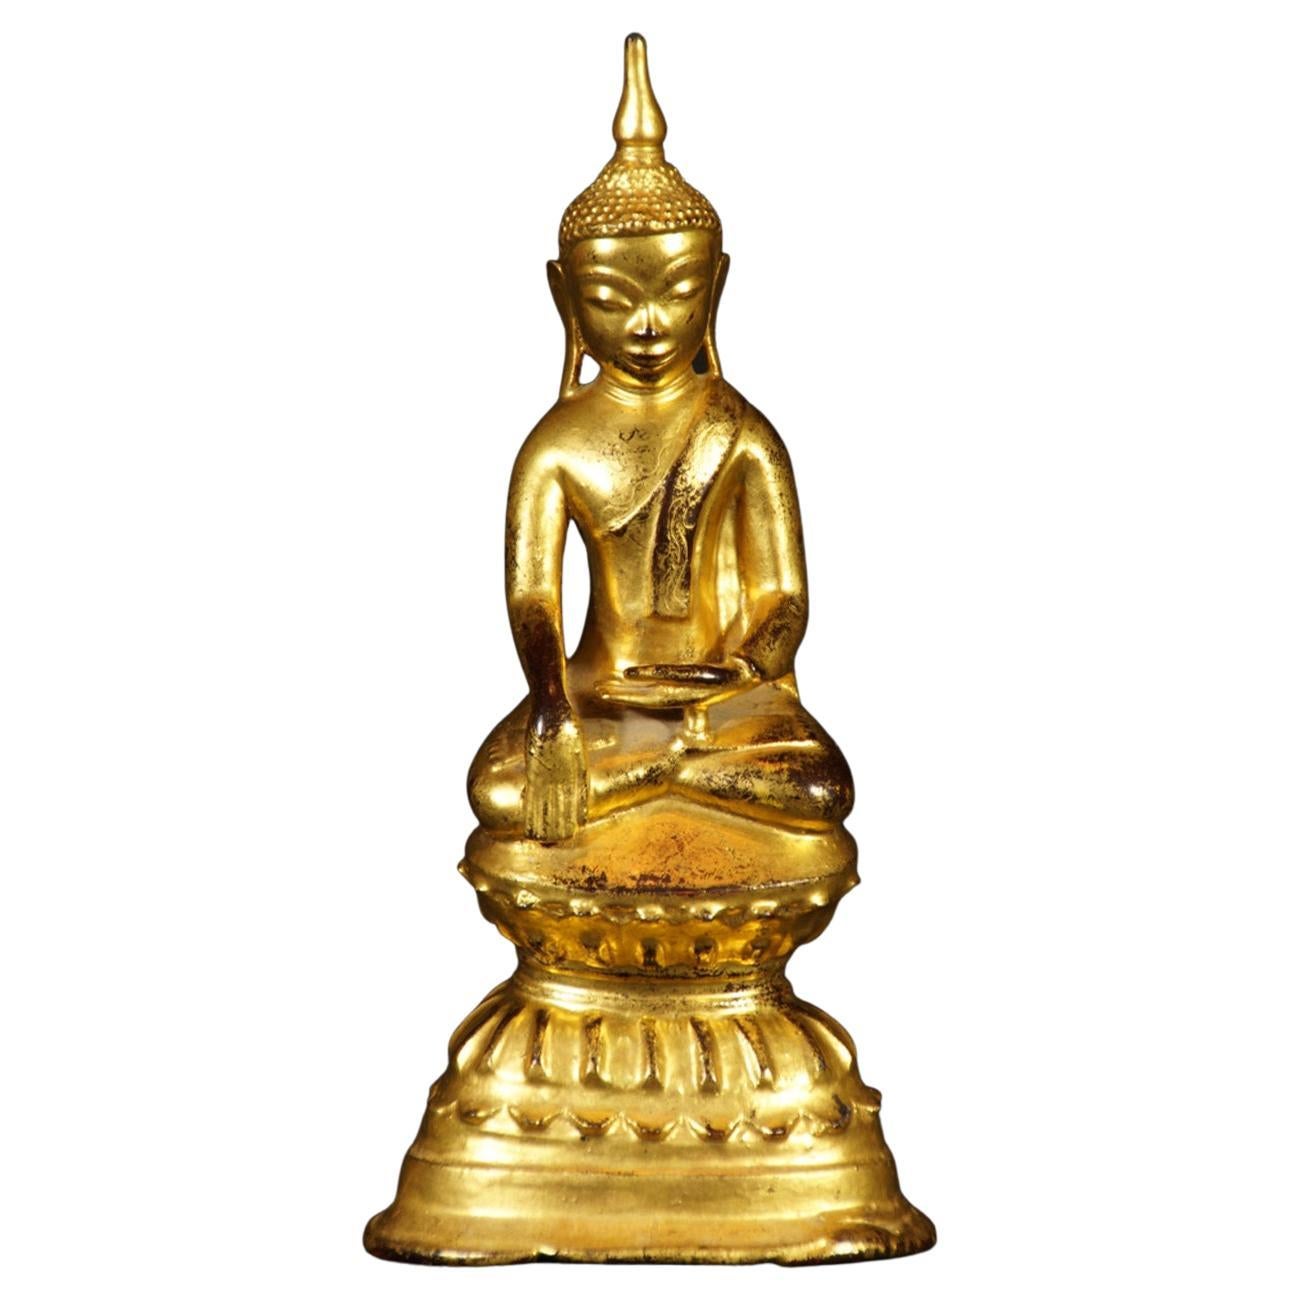 Authentic 18th Century Antique Bronze Buddha Statue from Burma: Original Buddhas For Sale